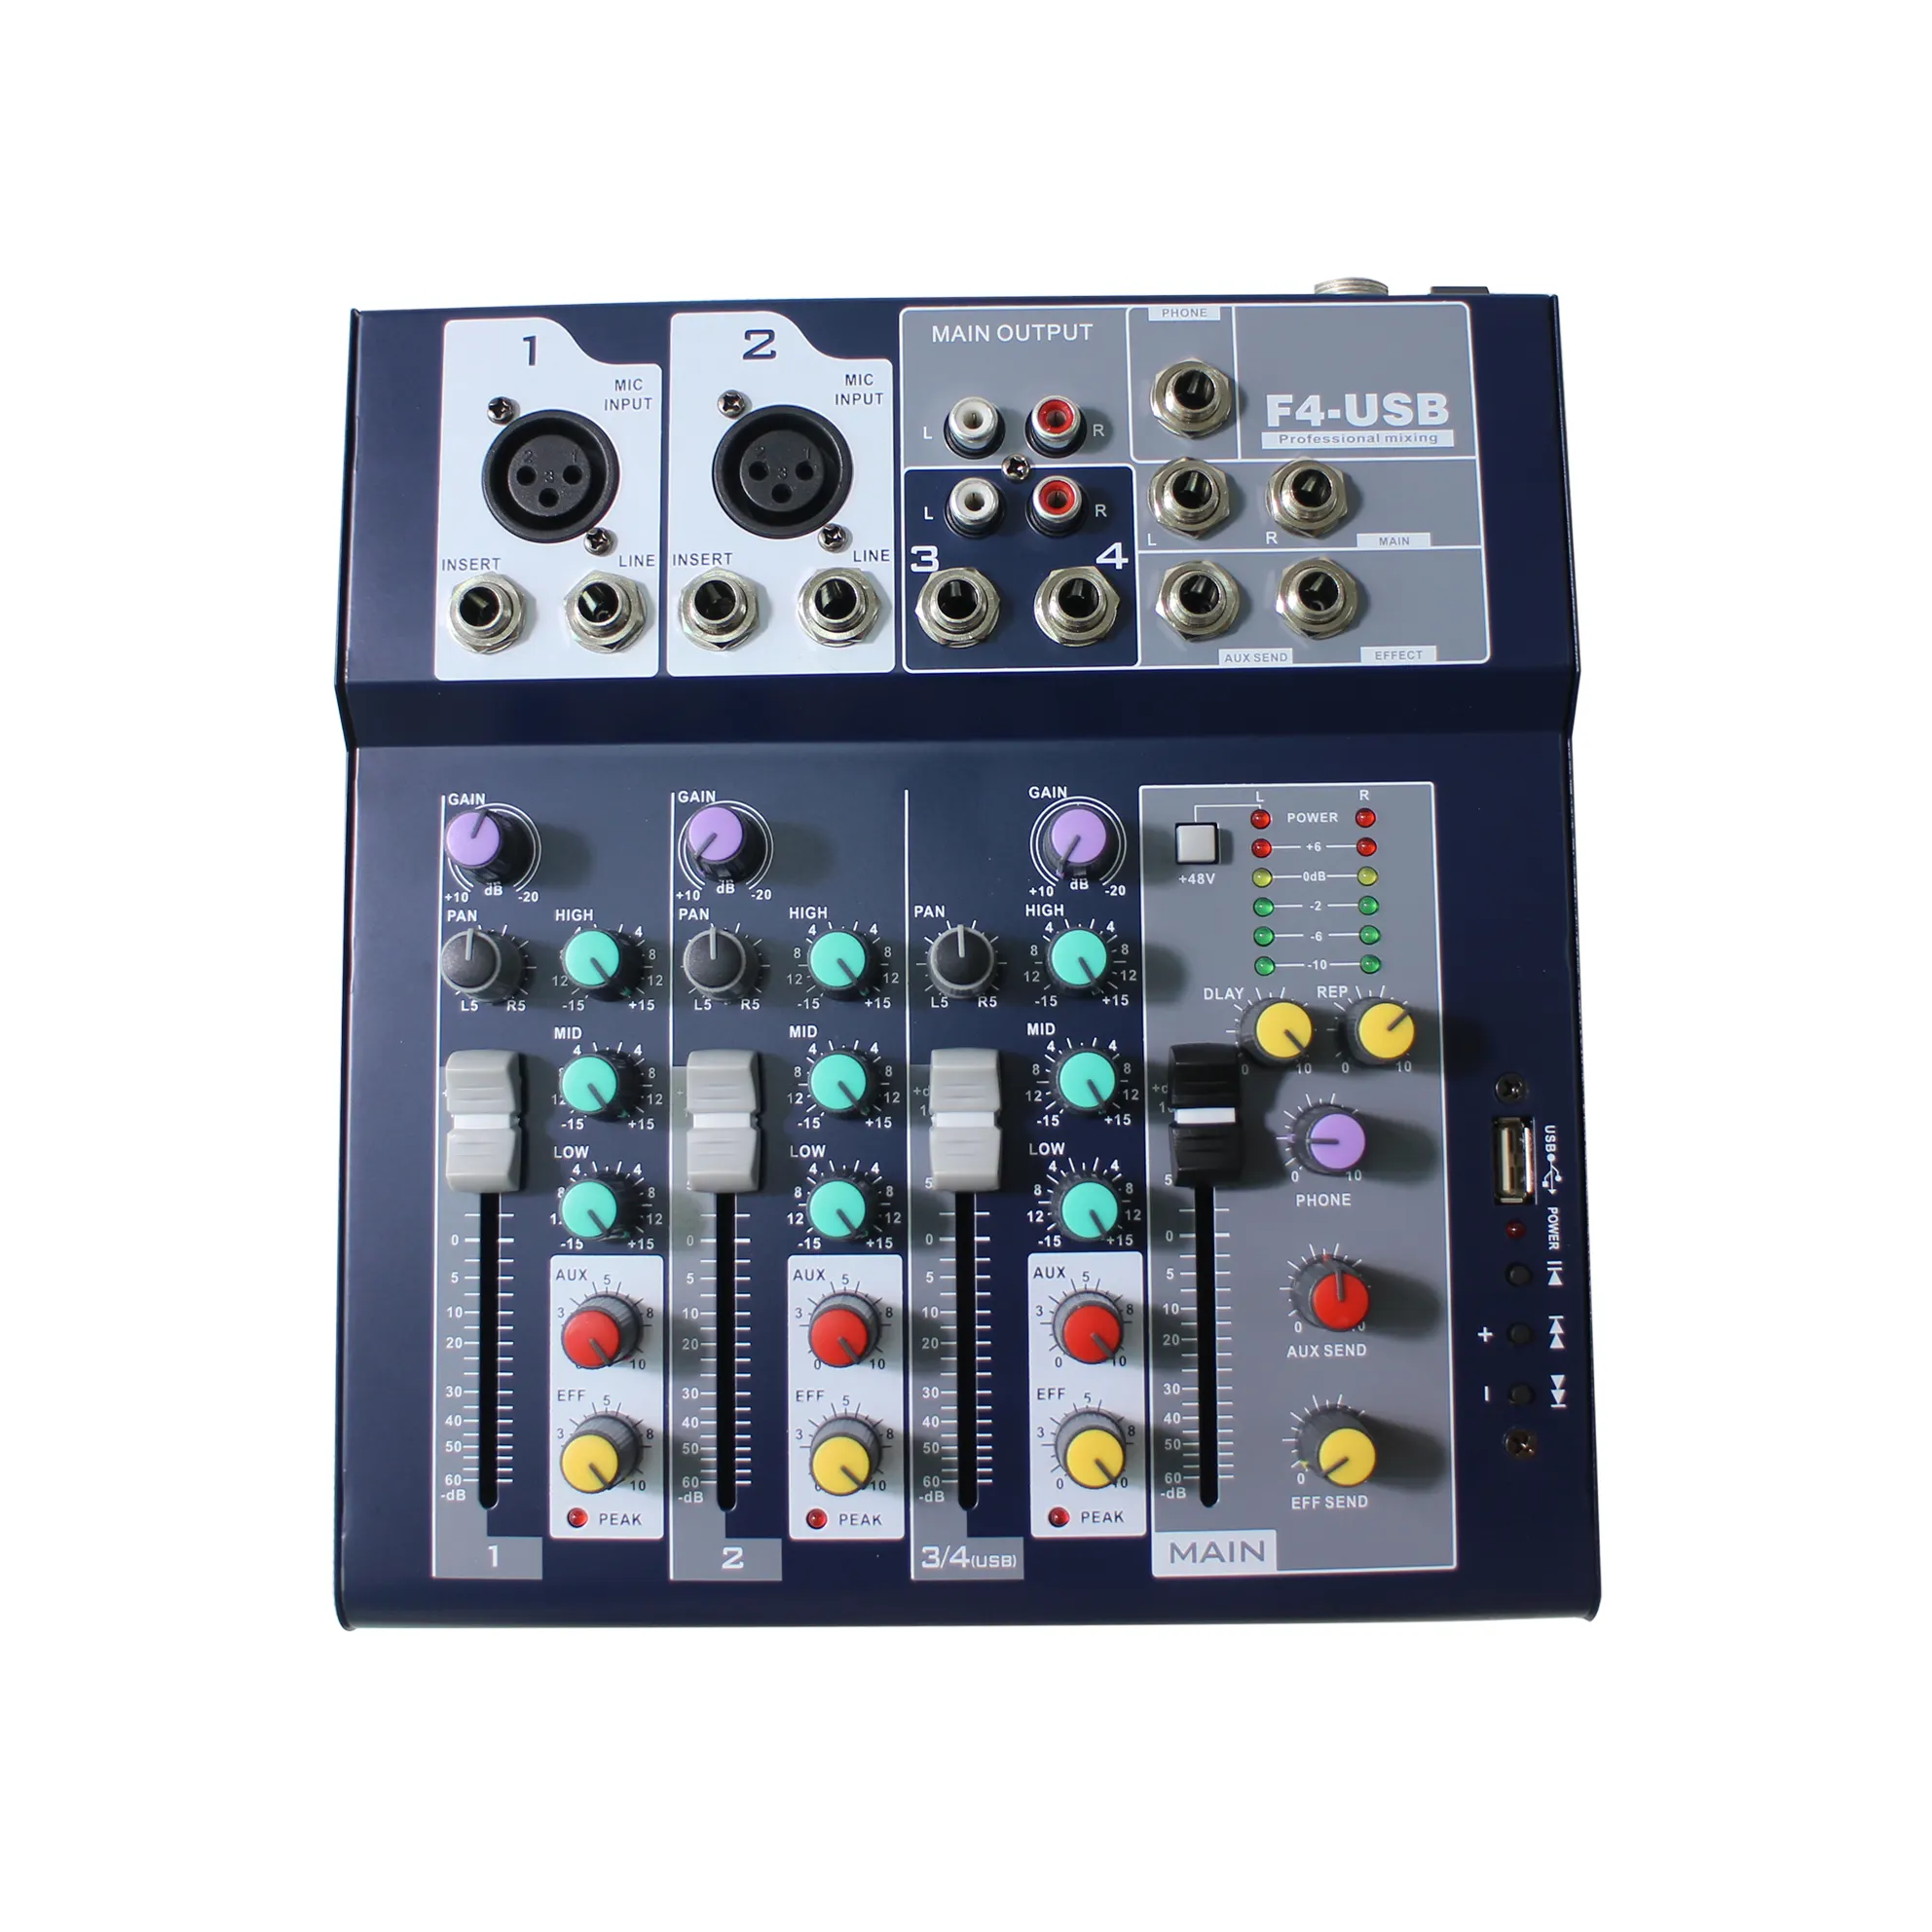 721042 4 channel 15 watt mini professional analog pa DJ sound audio mixer with USB interface for studio, broadcast, bar etc